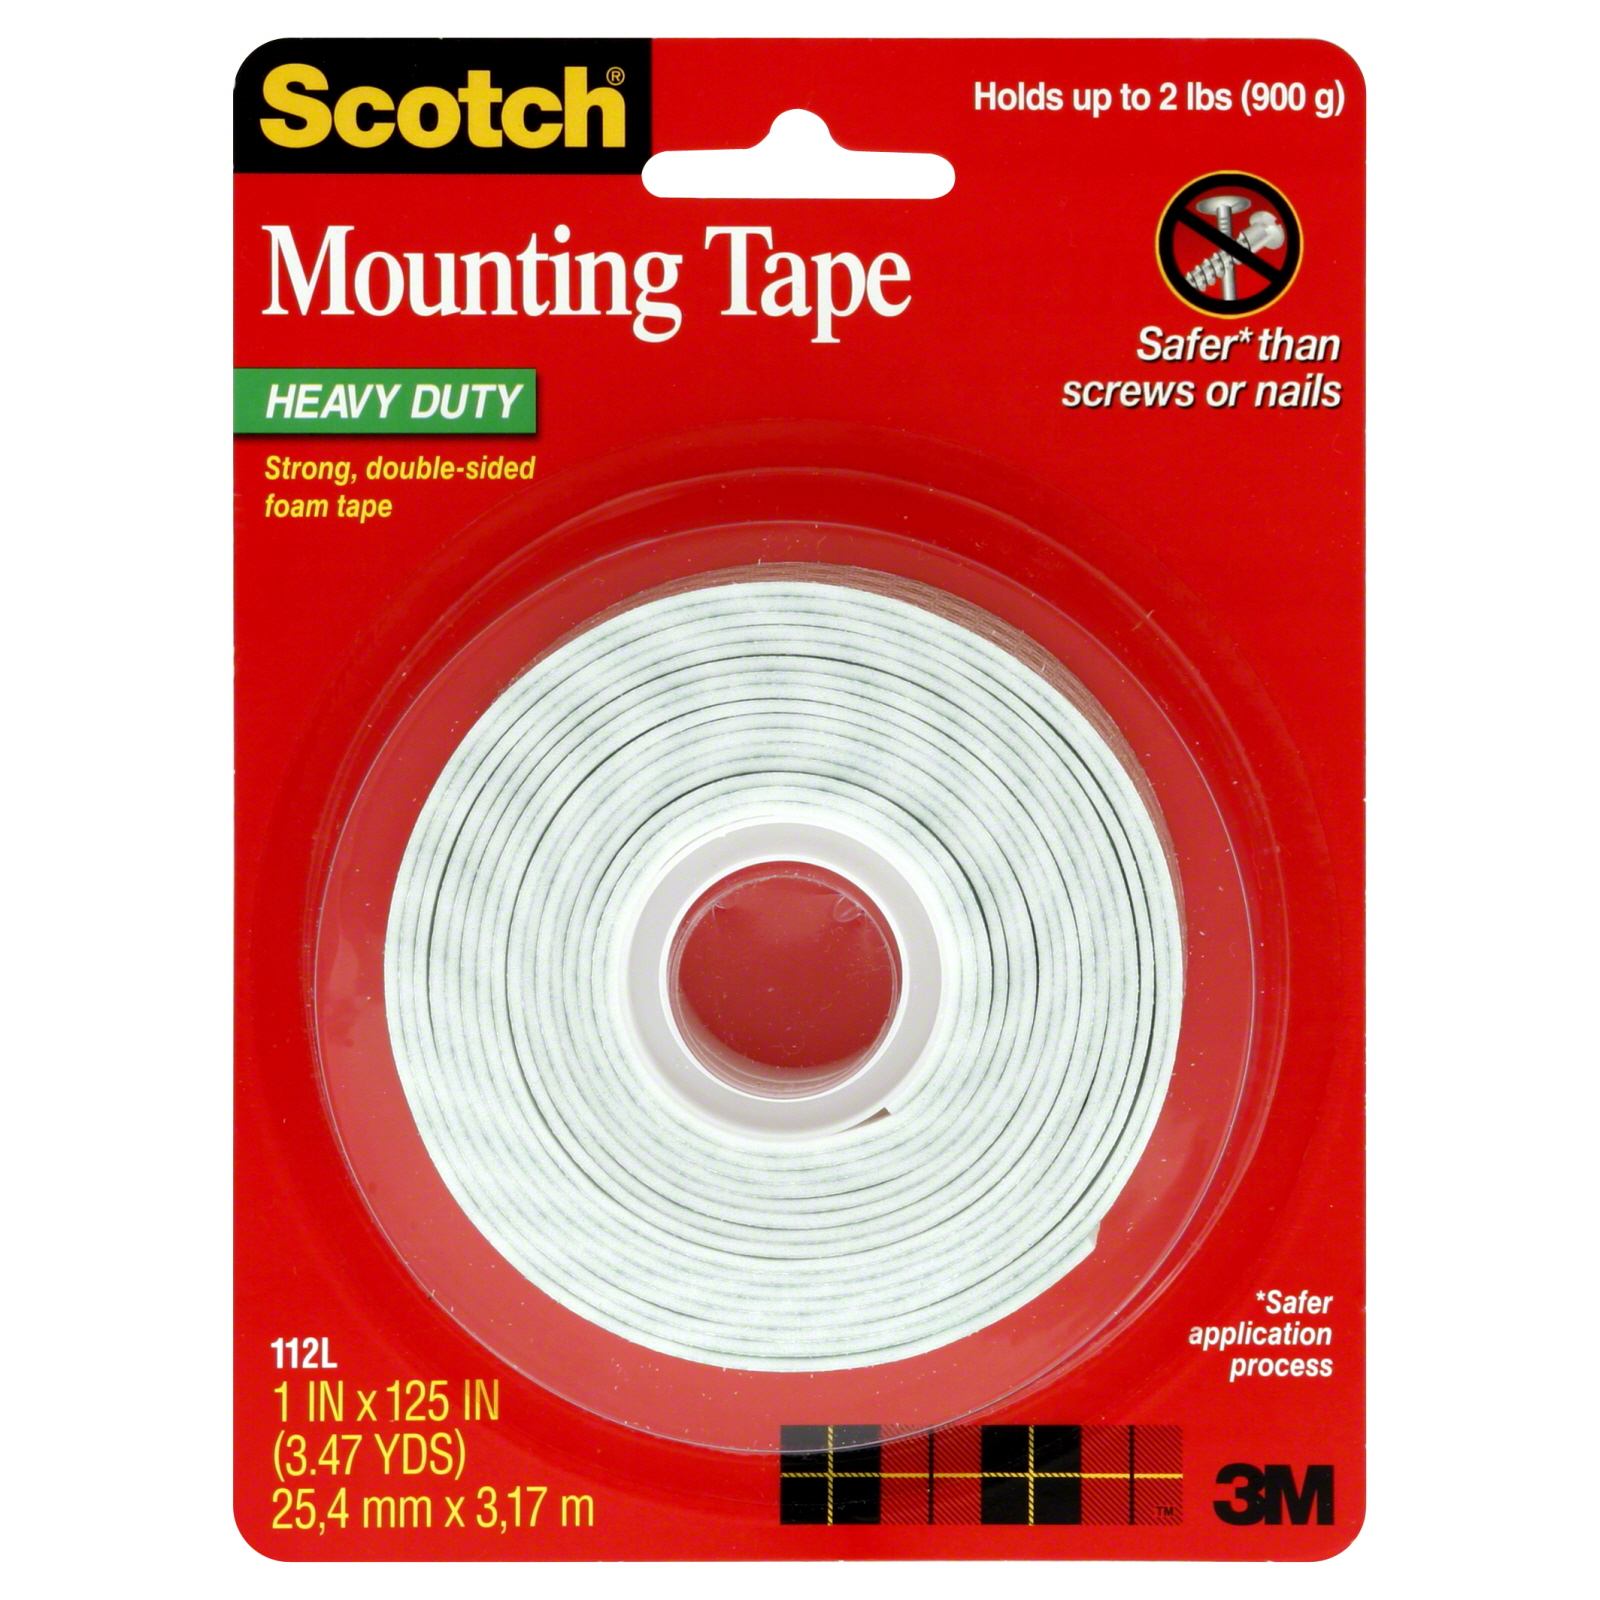 Scotch 1790674 Mounting Tape, Heavy Duty, 1 roll